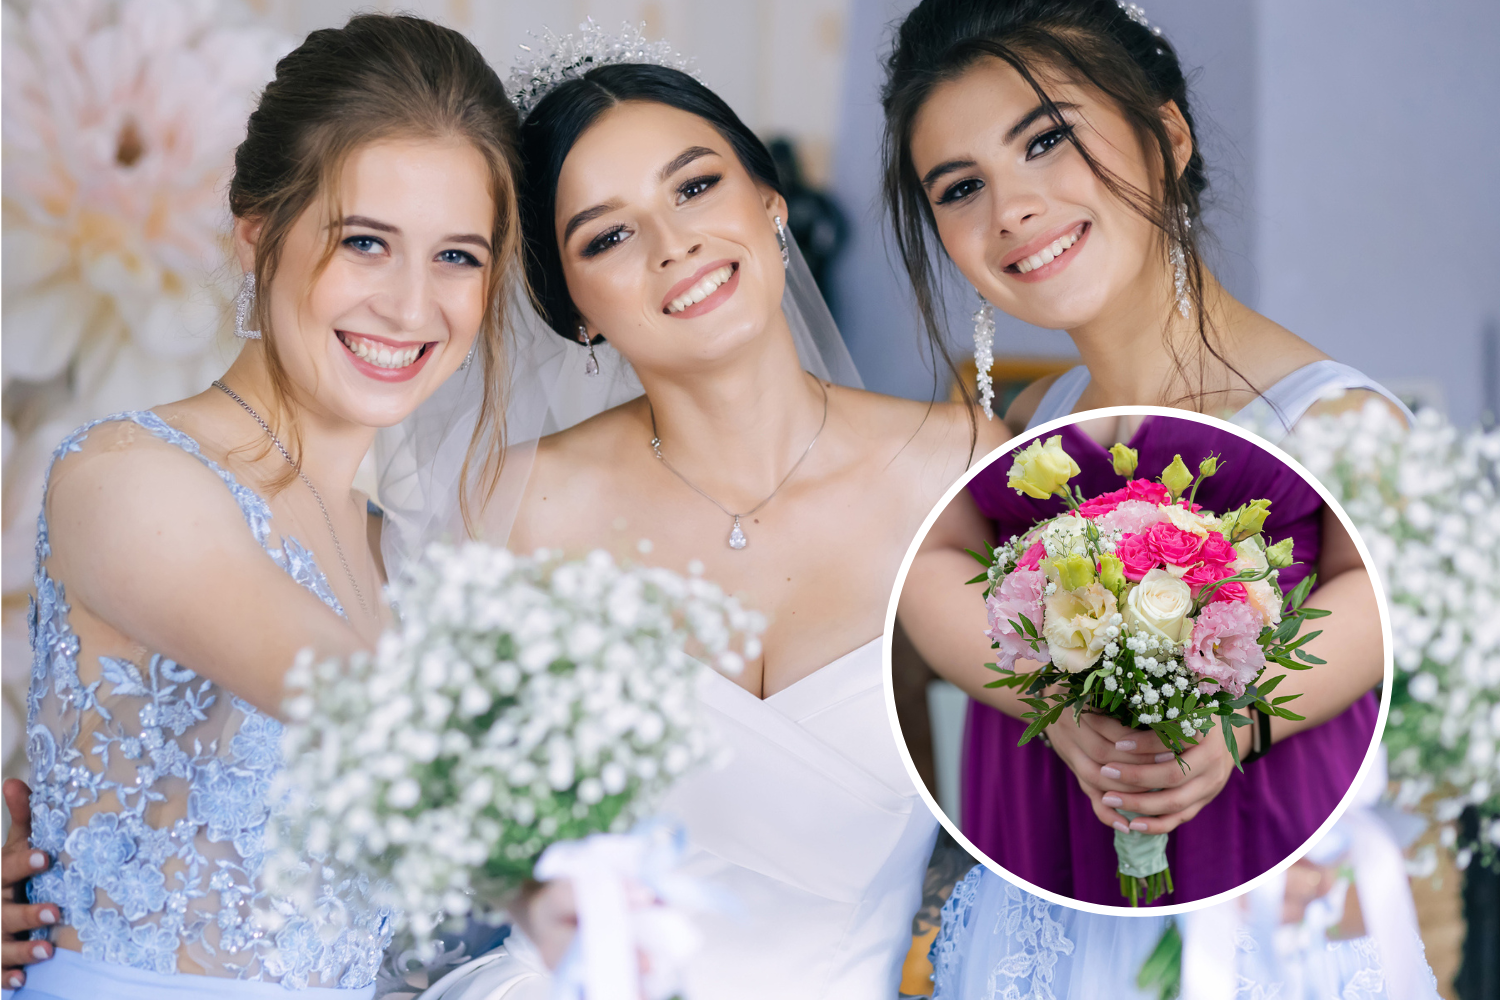 bridesmaid dress colors